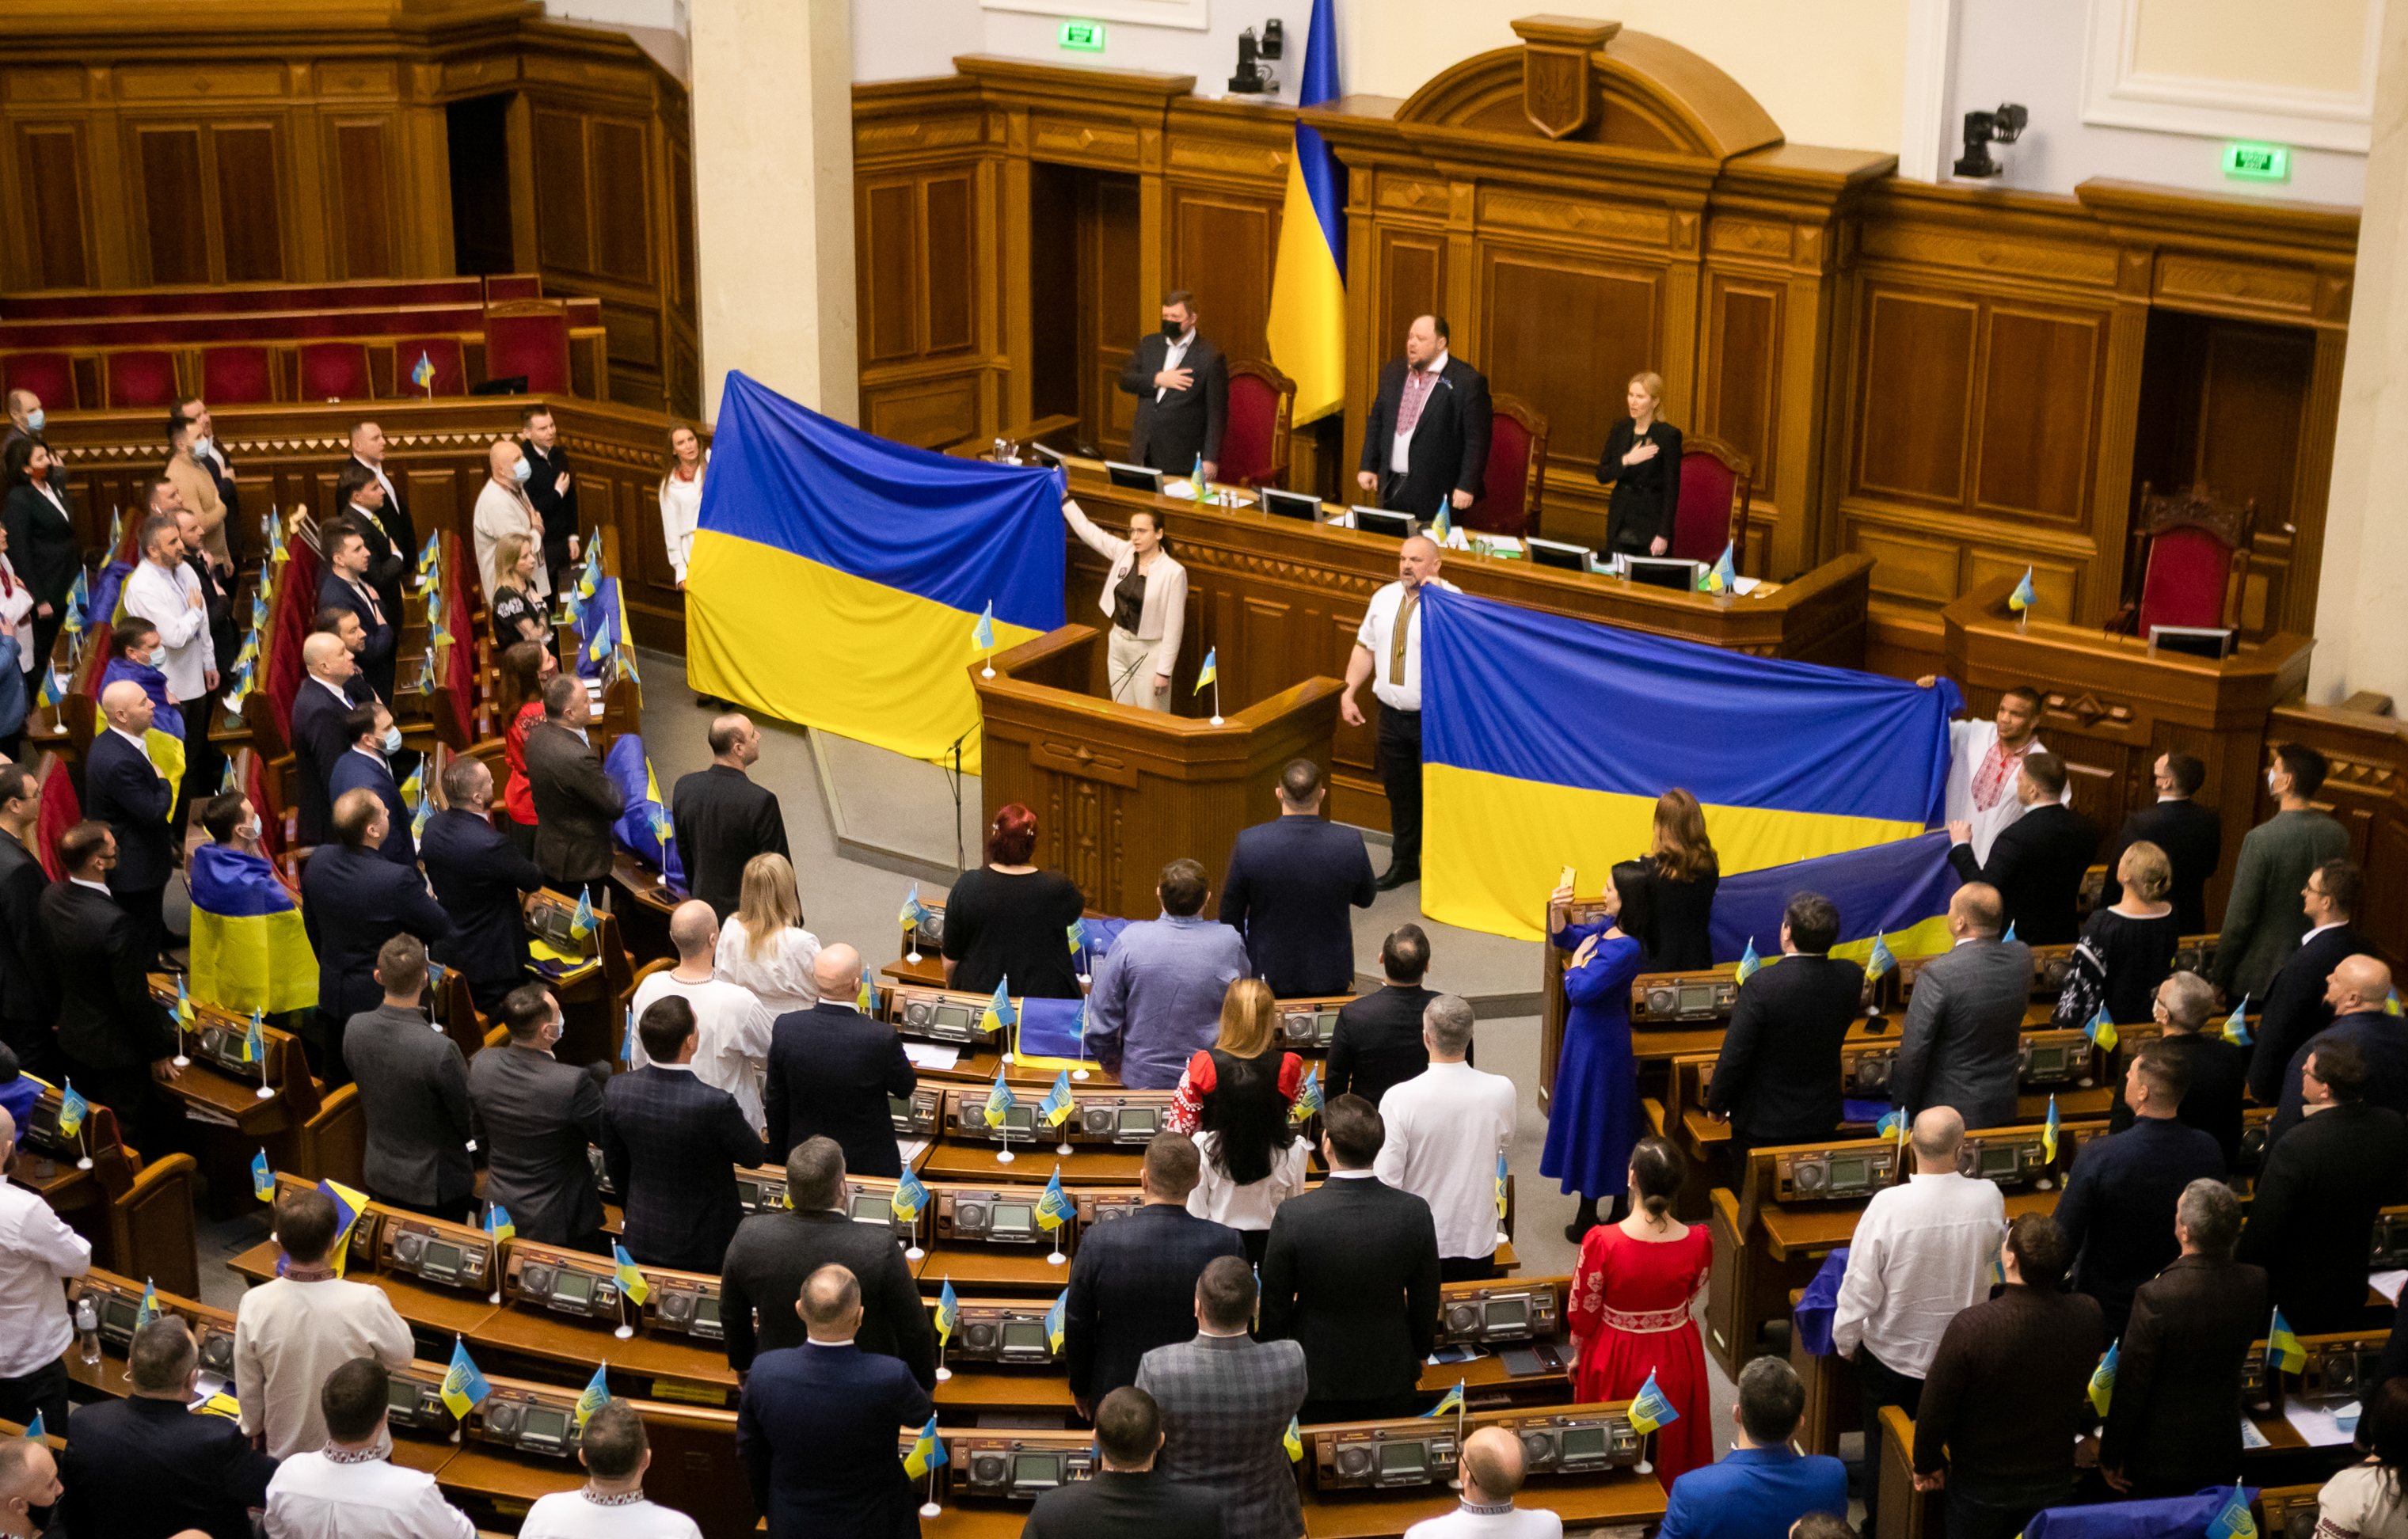 Ukrainian Parliament in session on Ukrainian Unity Day